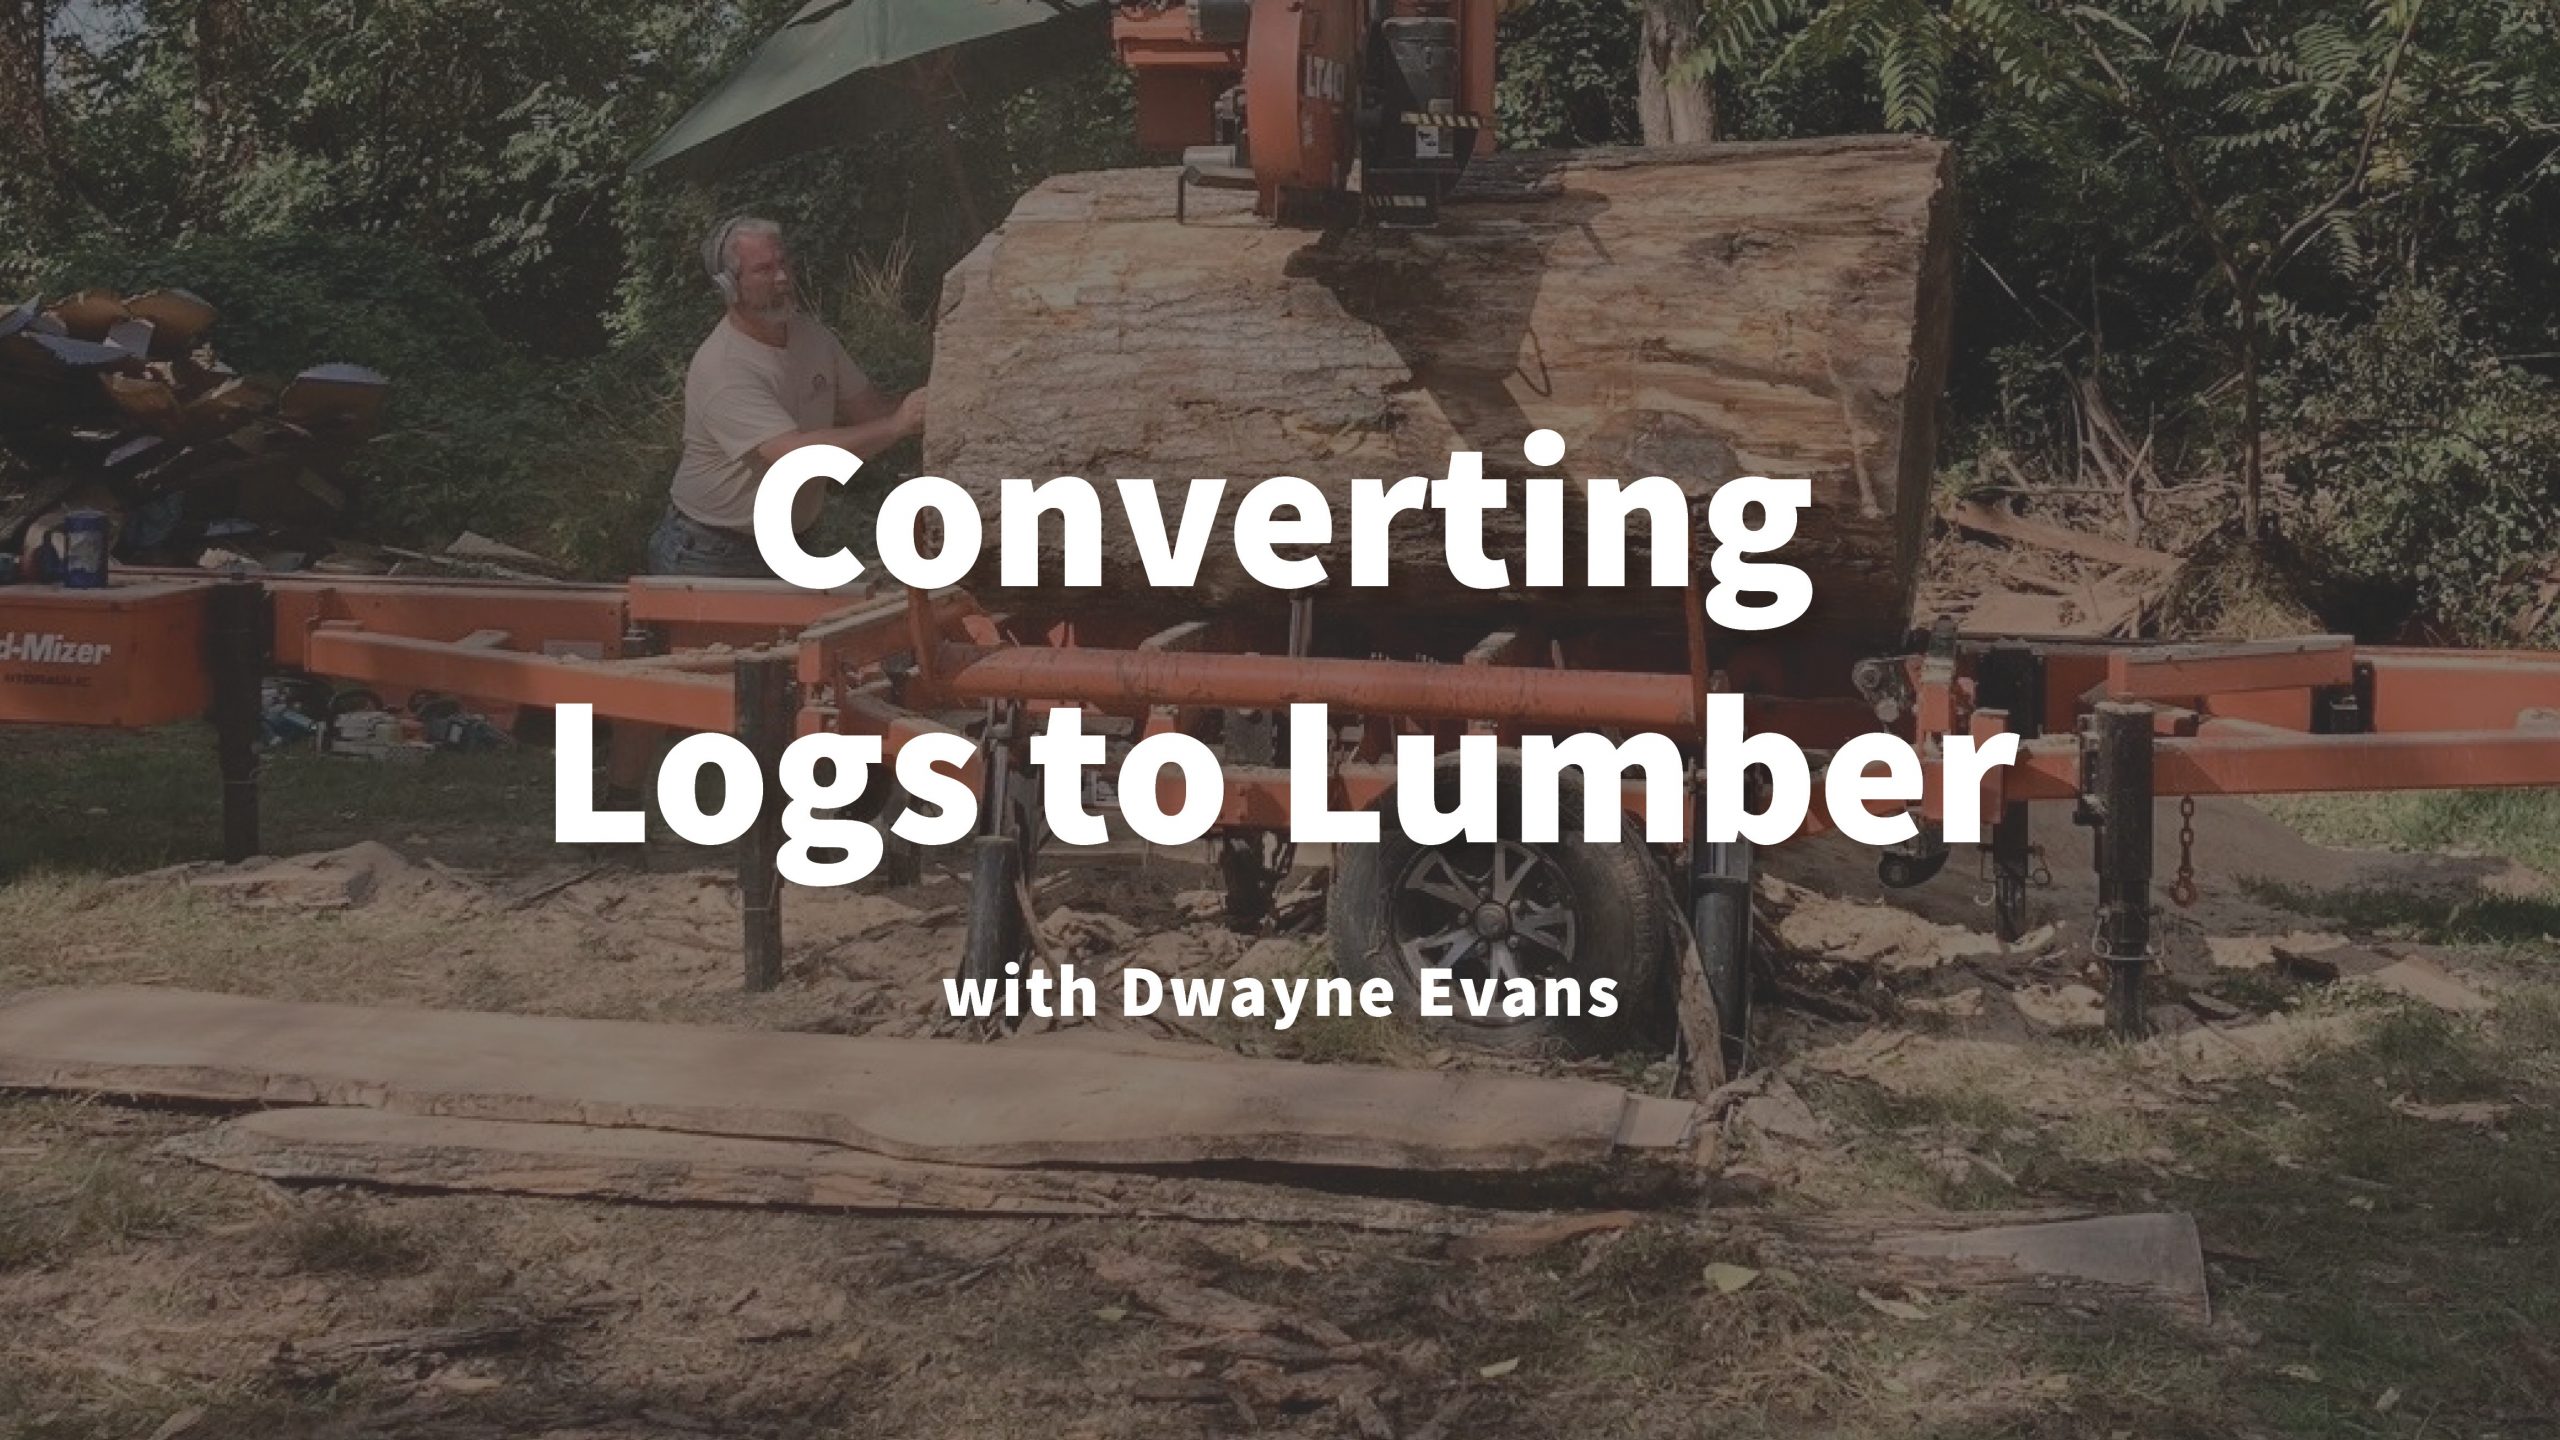 Converting logs to lumber video grab